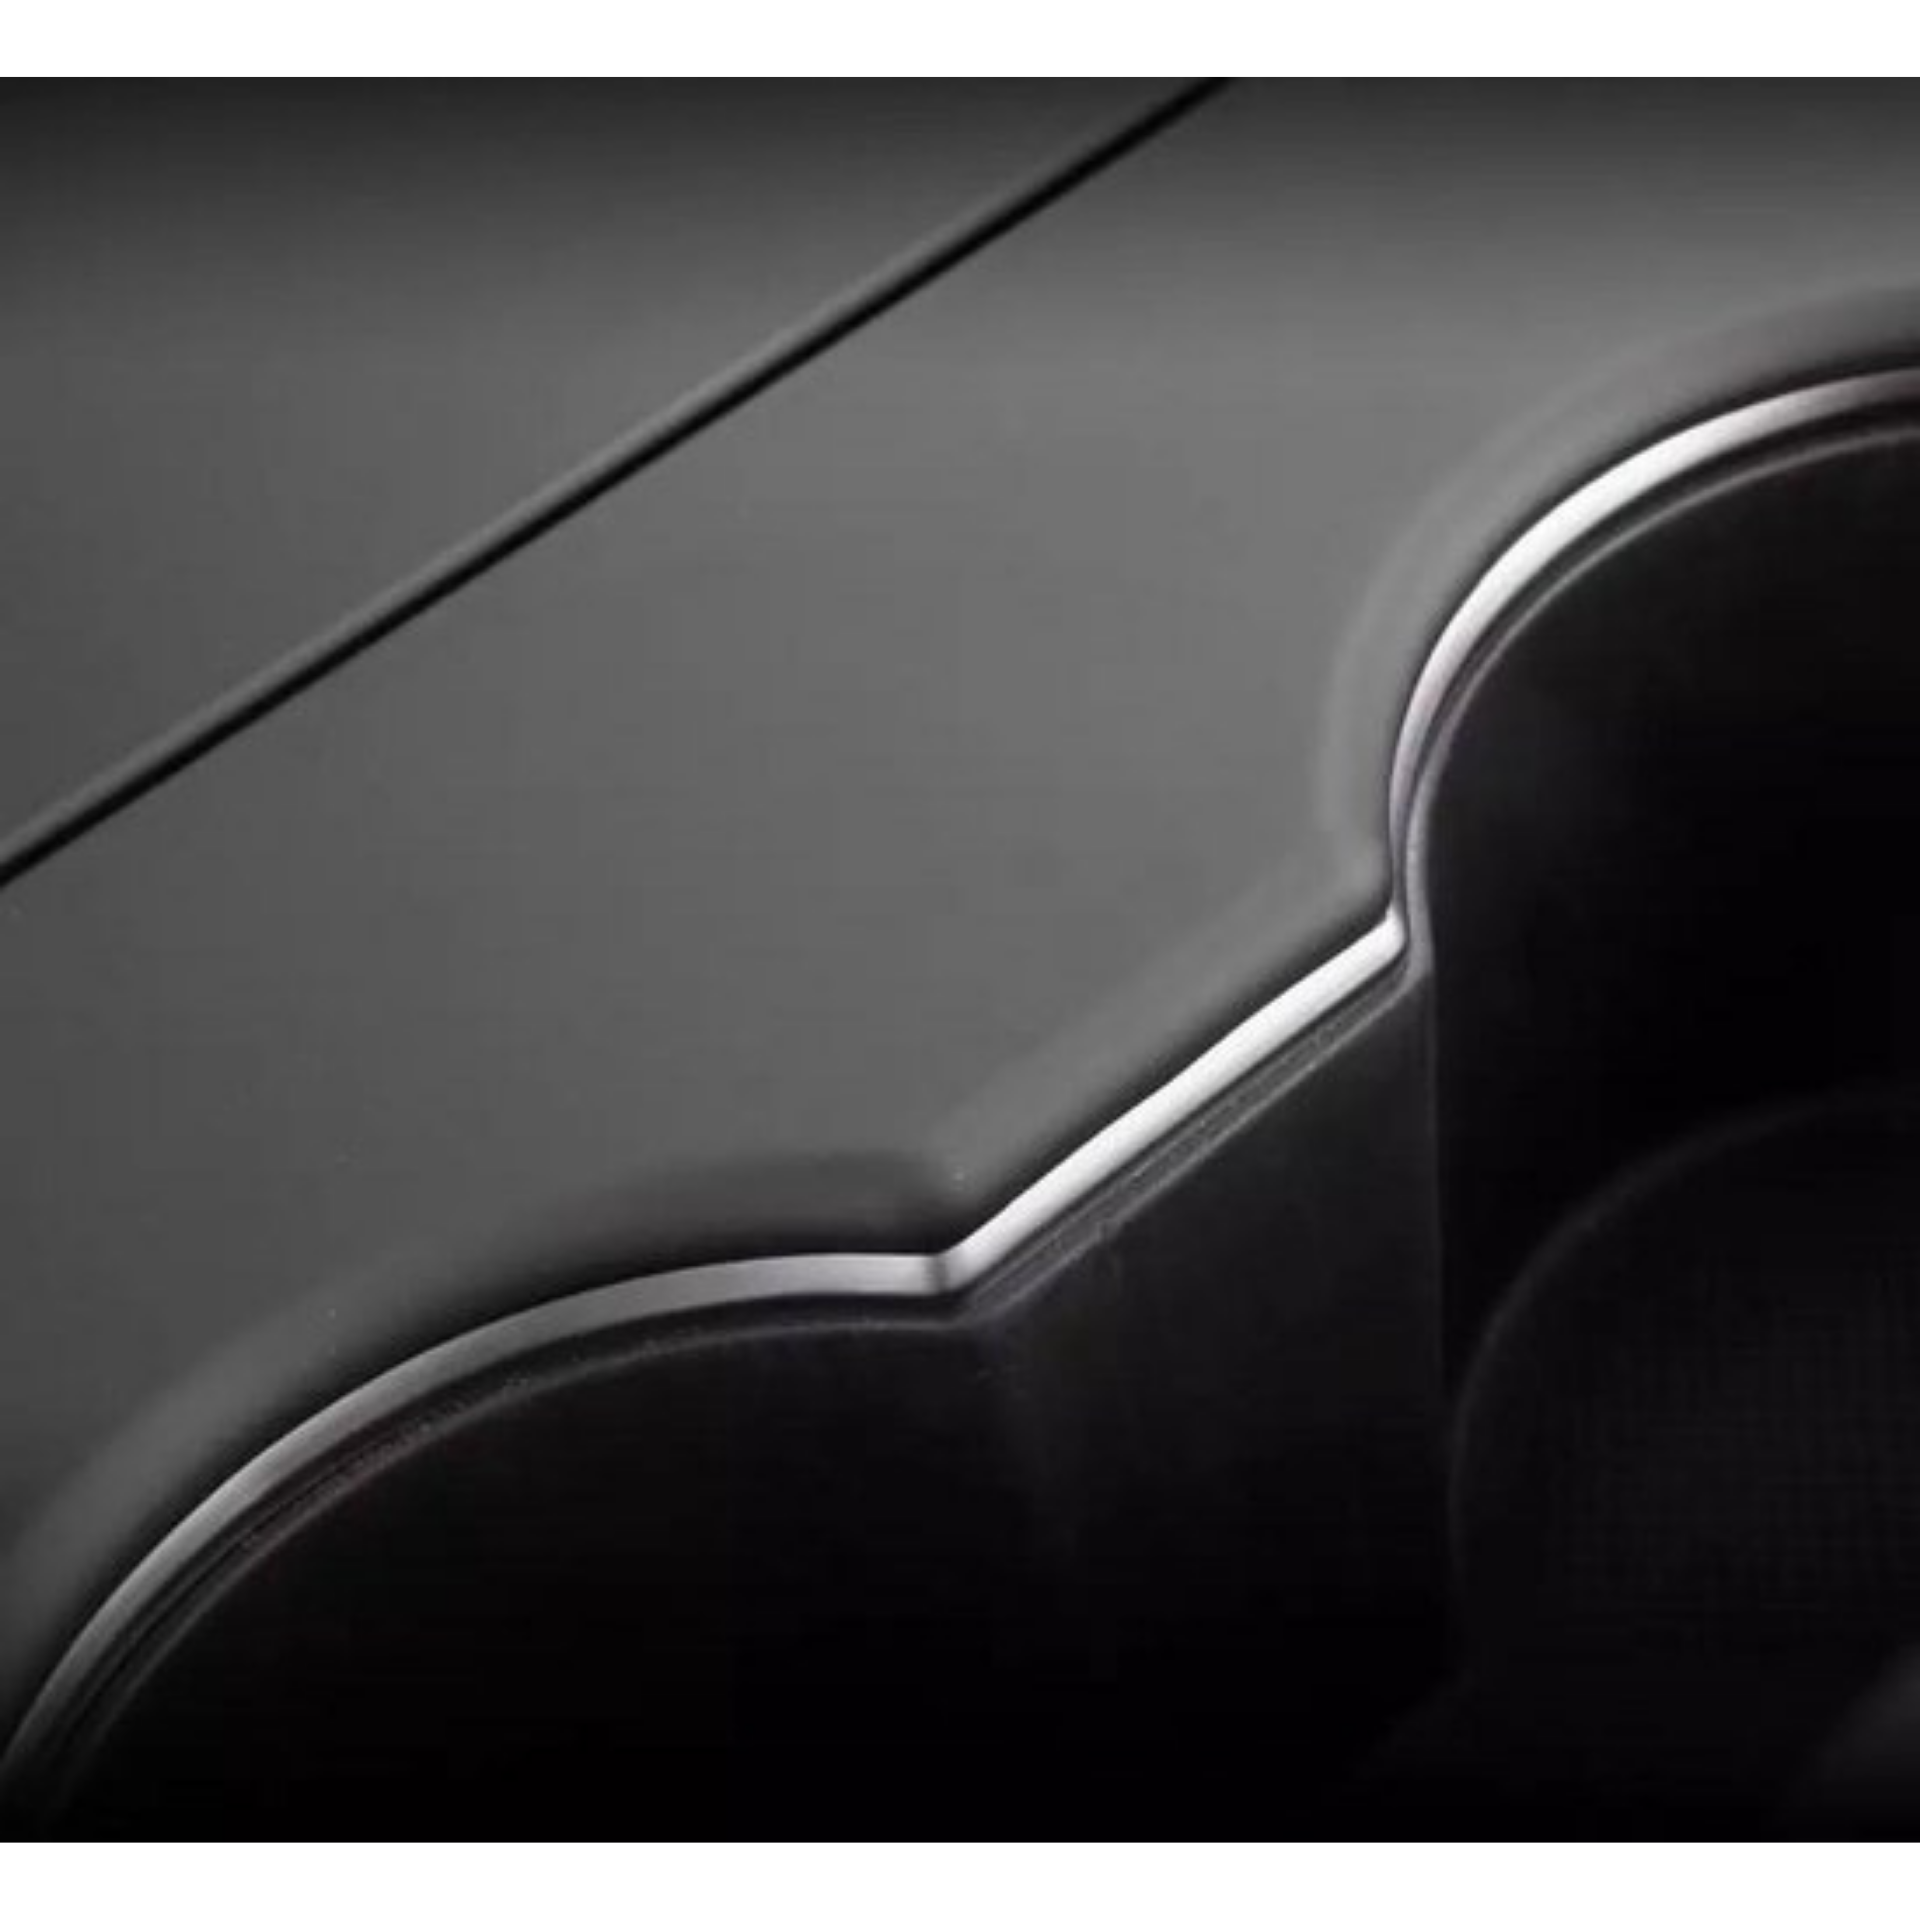 Tesla Model 3 Mat Zwarte Panelen Middenconsole Wrap Auto Interieur Accessoires Nederland België